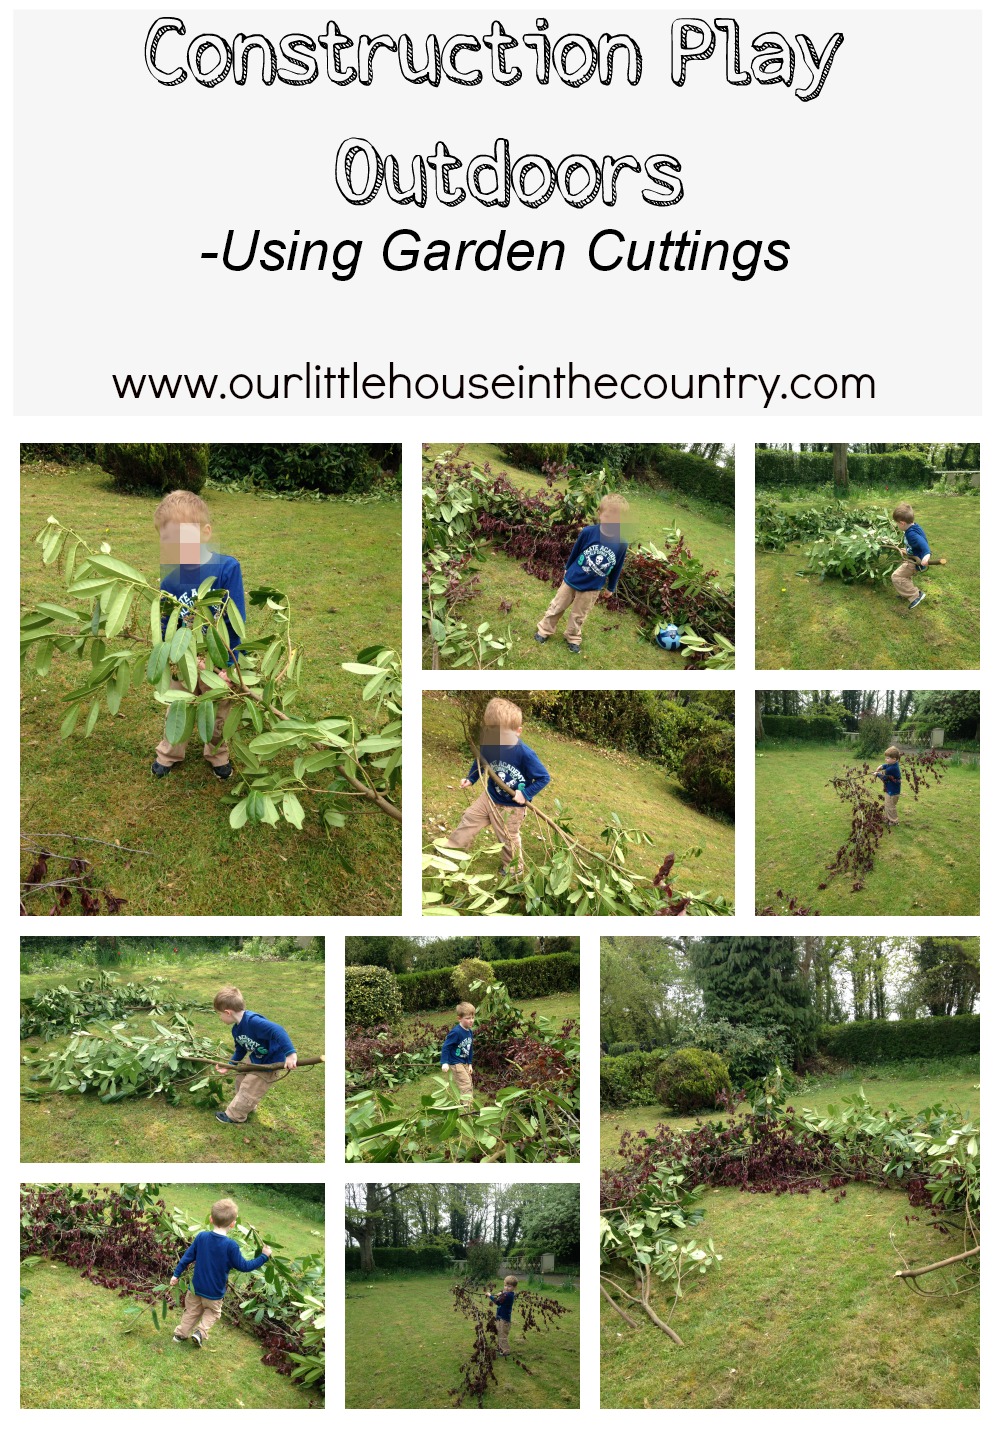 Construction Play Outdoors – Using Garden Cuttings!